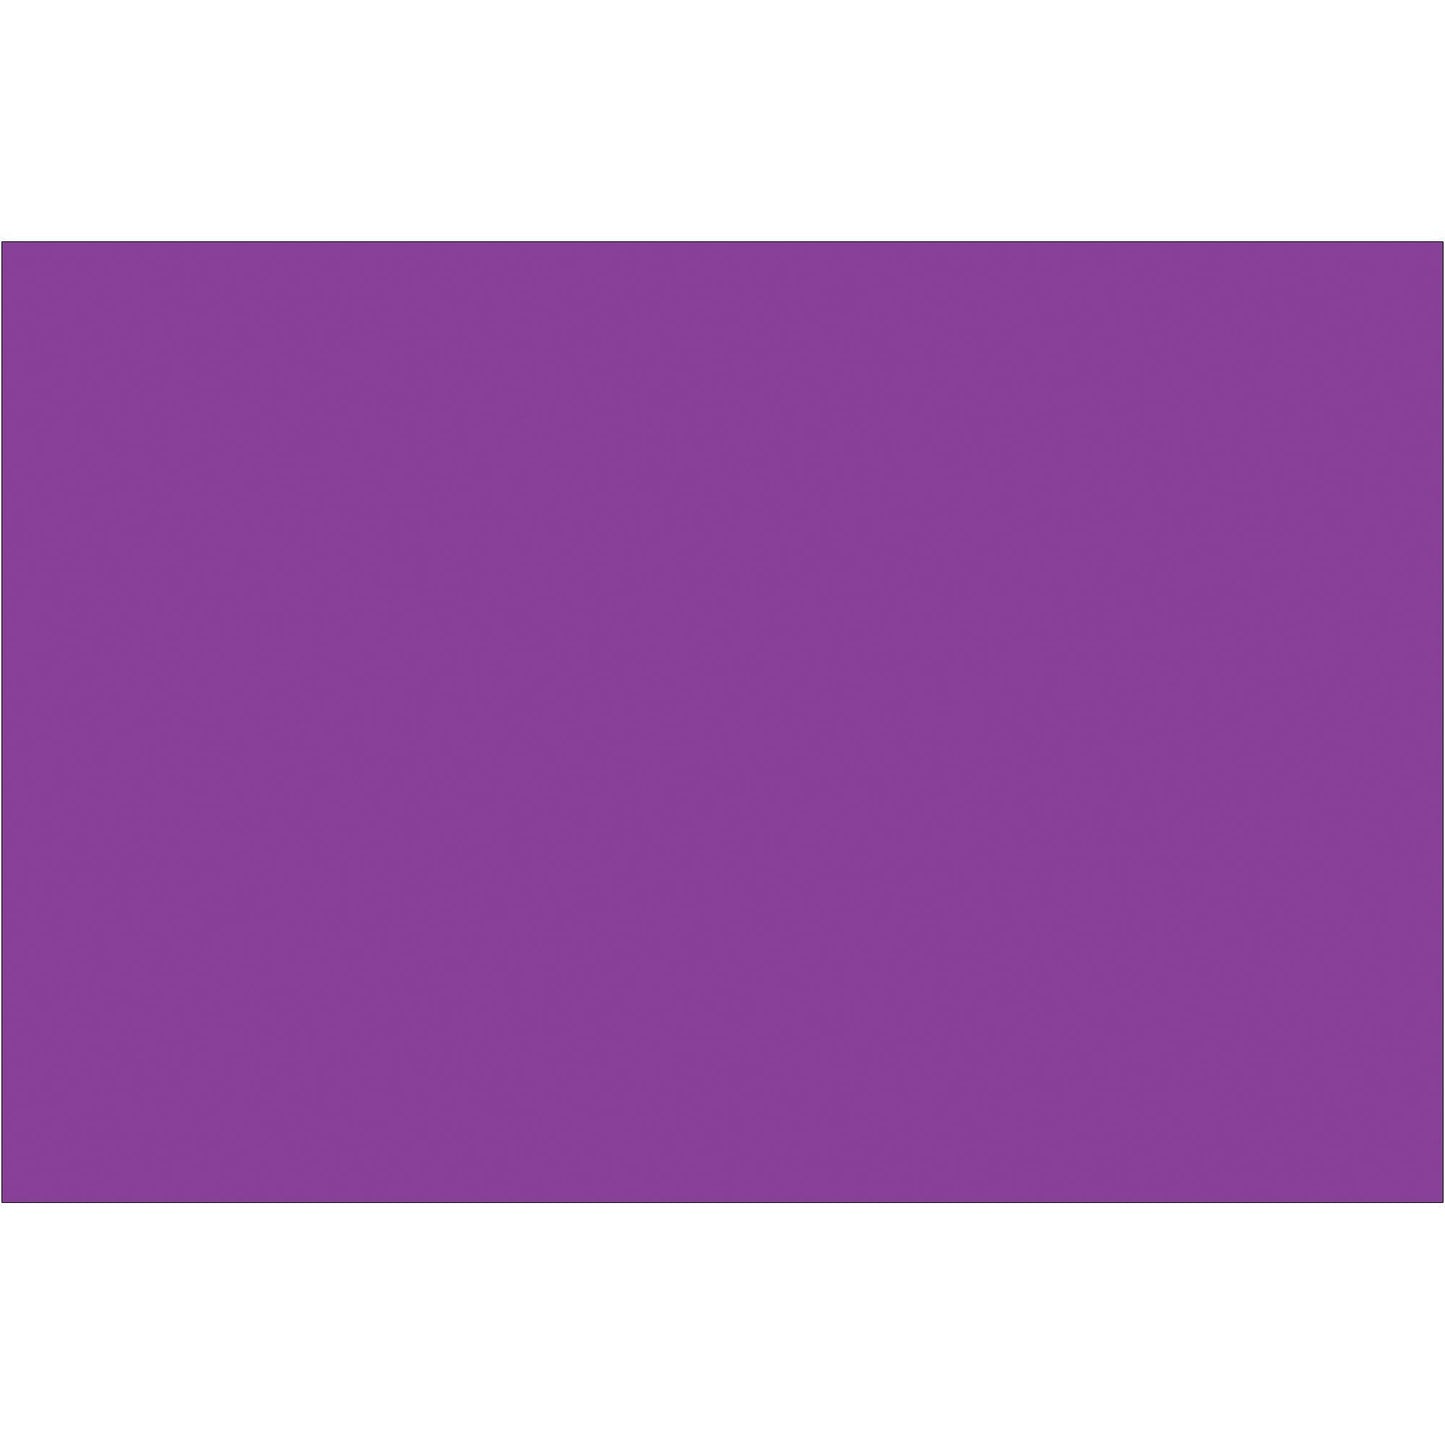 4 x 6" Purple Inventory Rectangle Labels - DL635M